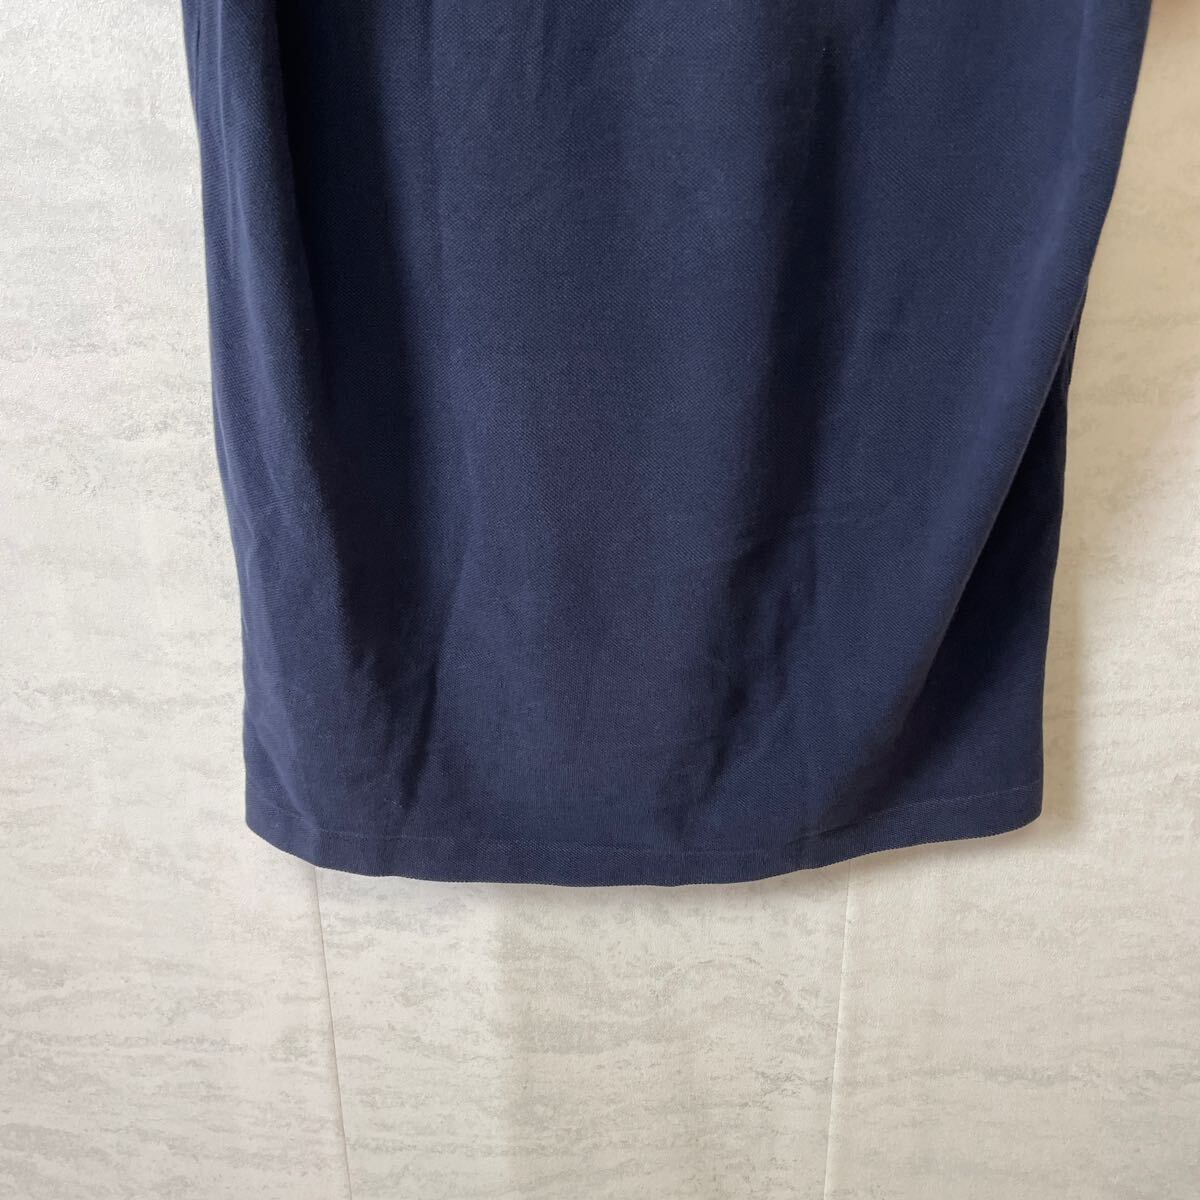  рубашка-поло Polo Ralph Lauren Polo bai Ralph Lauren one отметка Logo размер M темно-синий цвет темно-синий мужской б/у одежда 